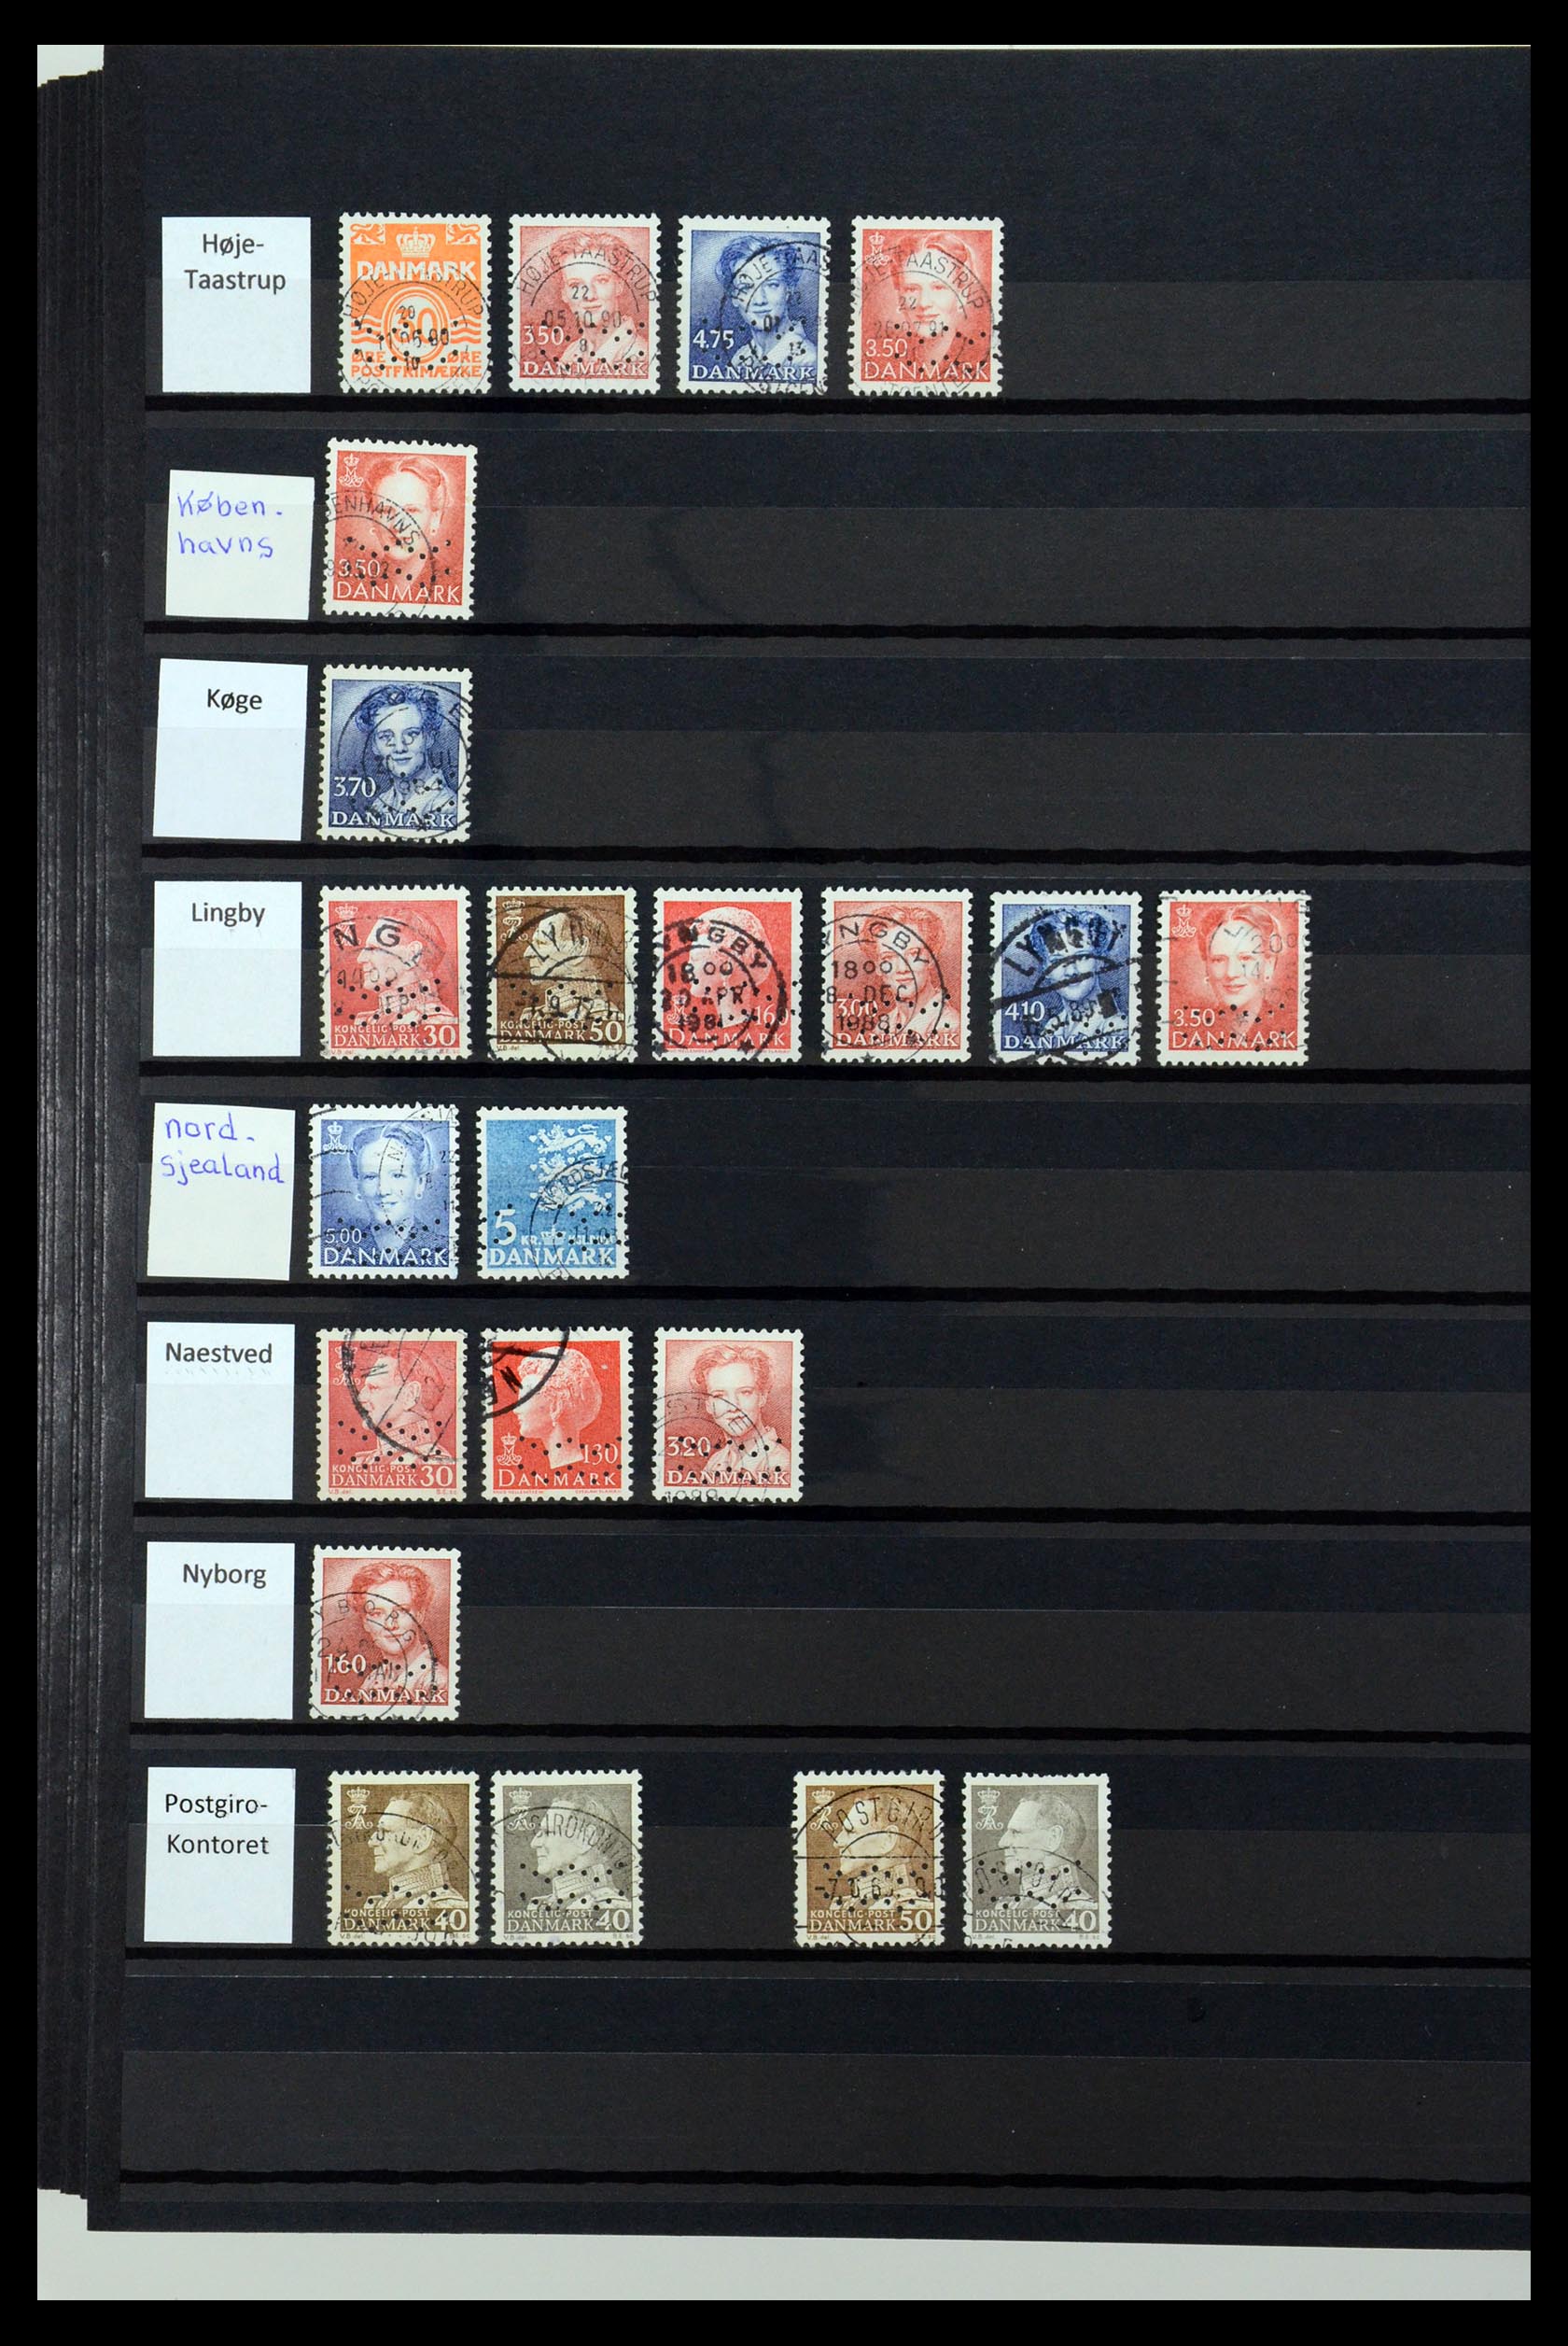 36396 115 - Stamp collection 36396 Denmark perfins.